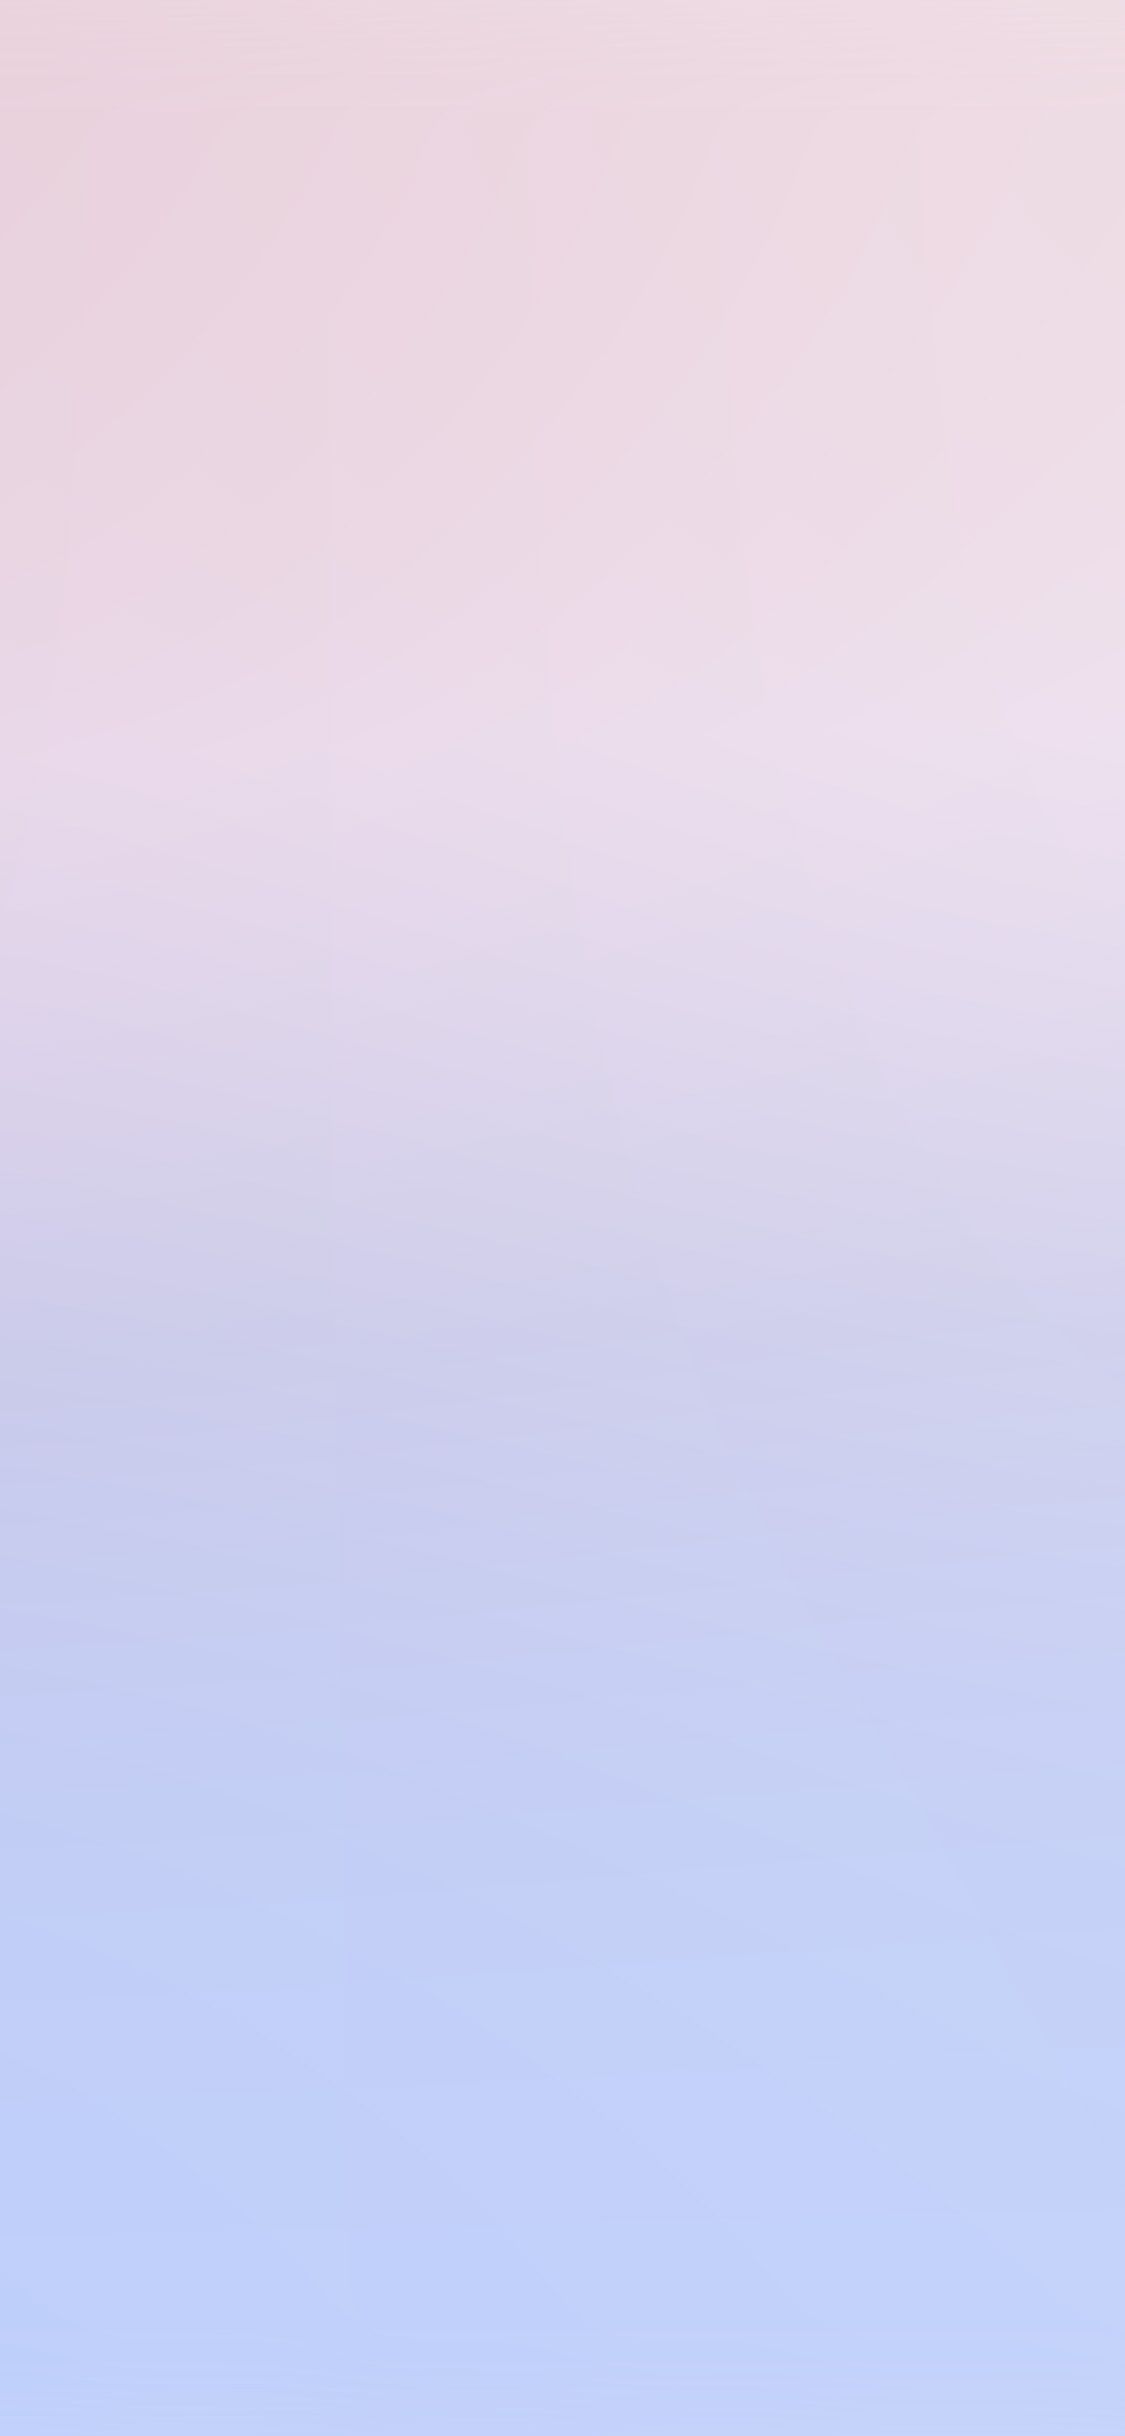 iPhone X wallpaper. pastel blue red morning blur gradation